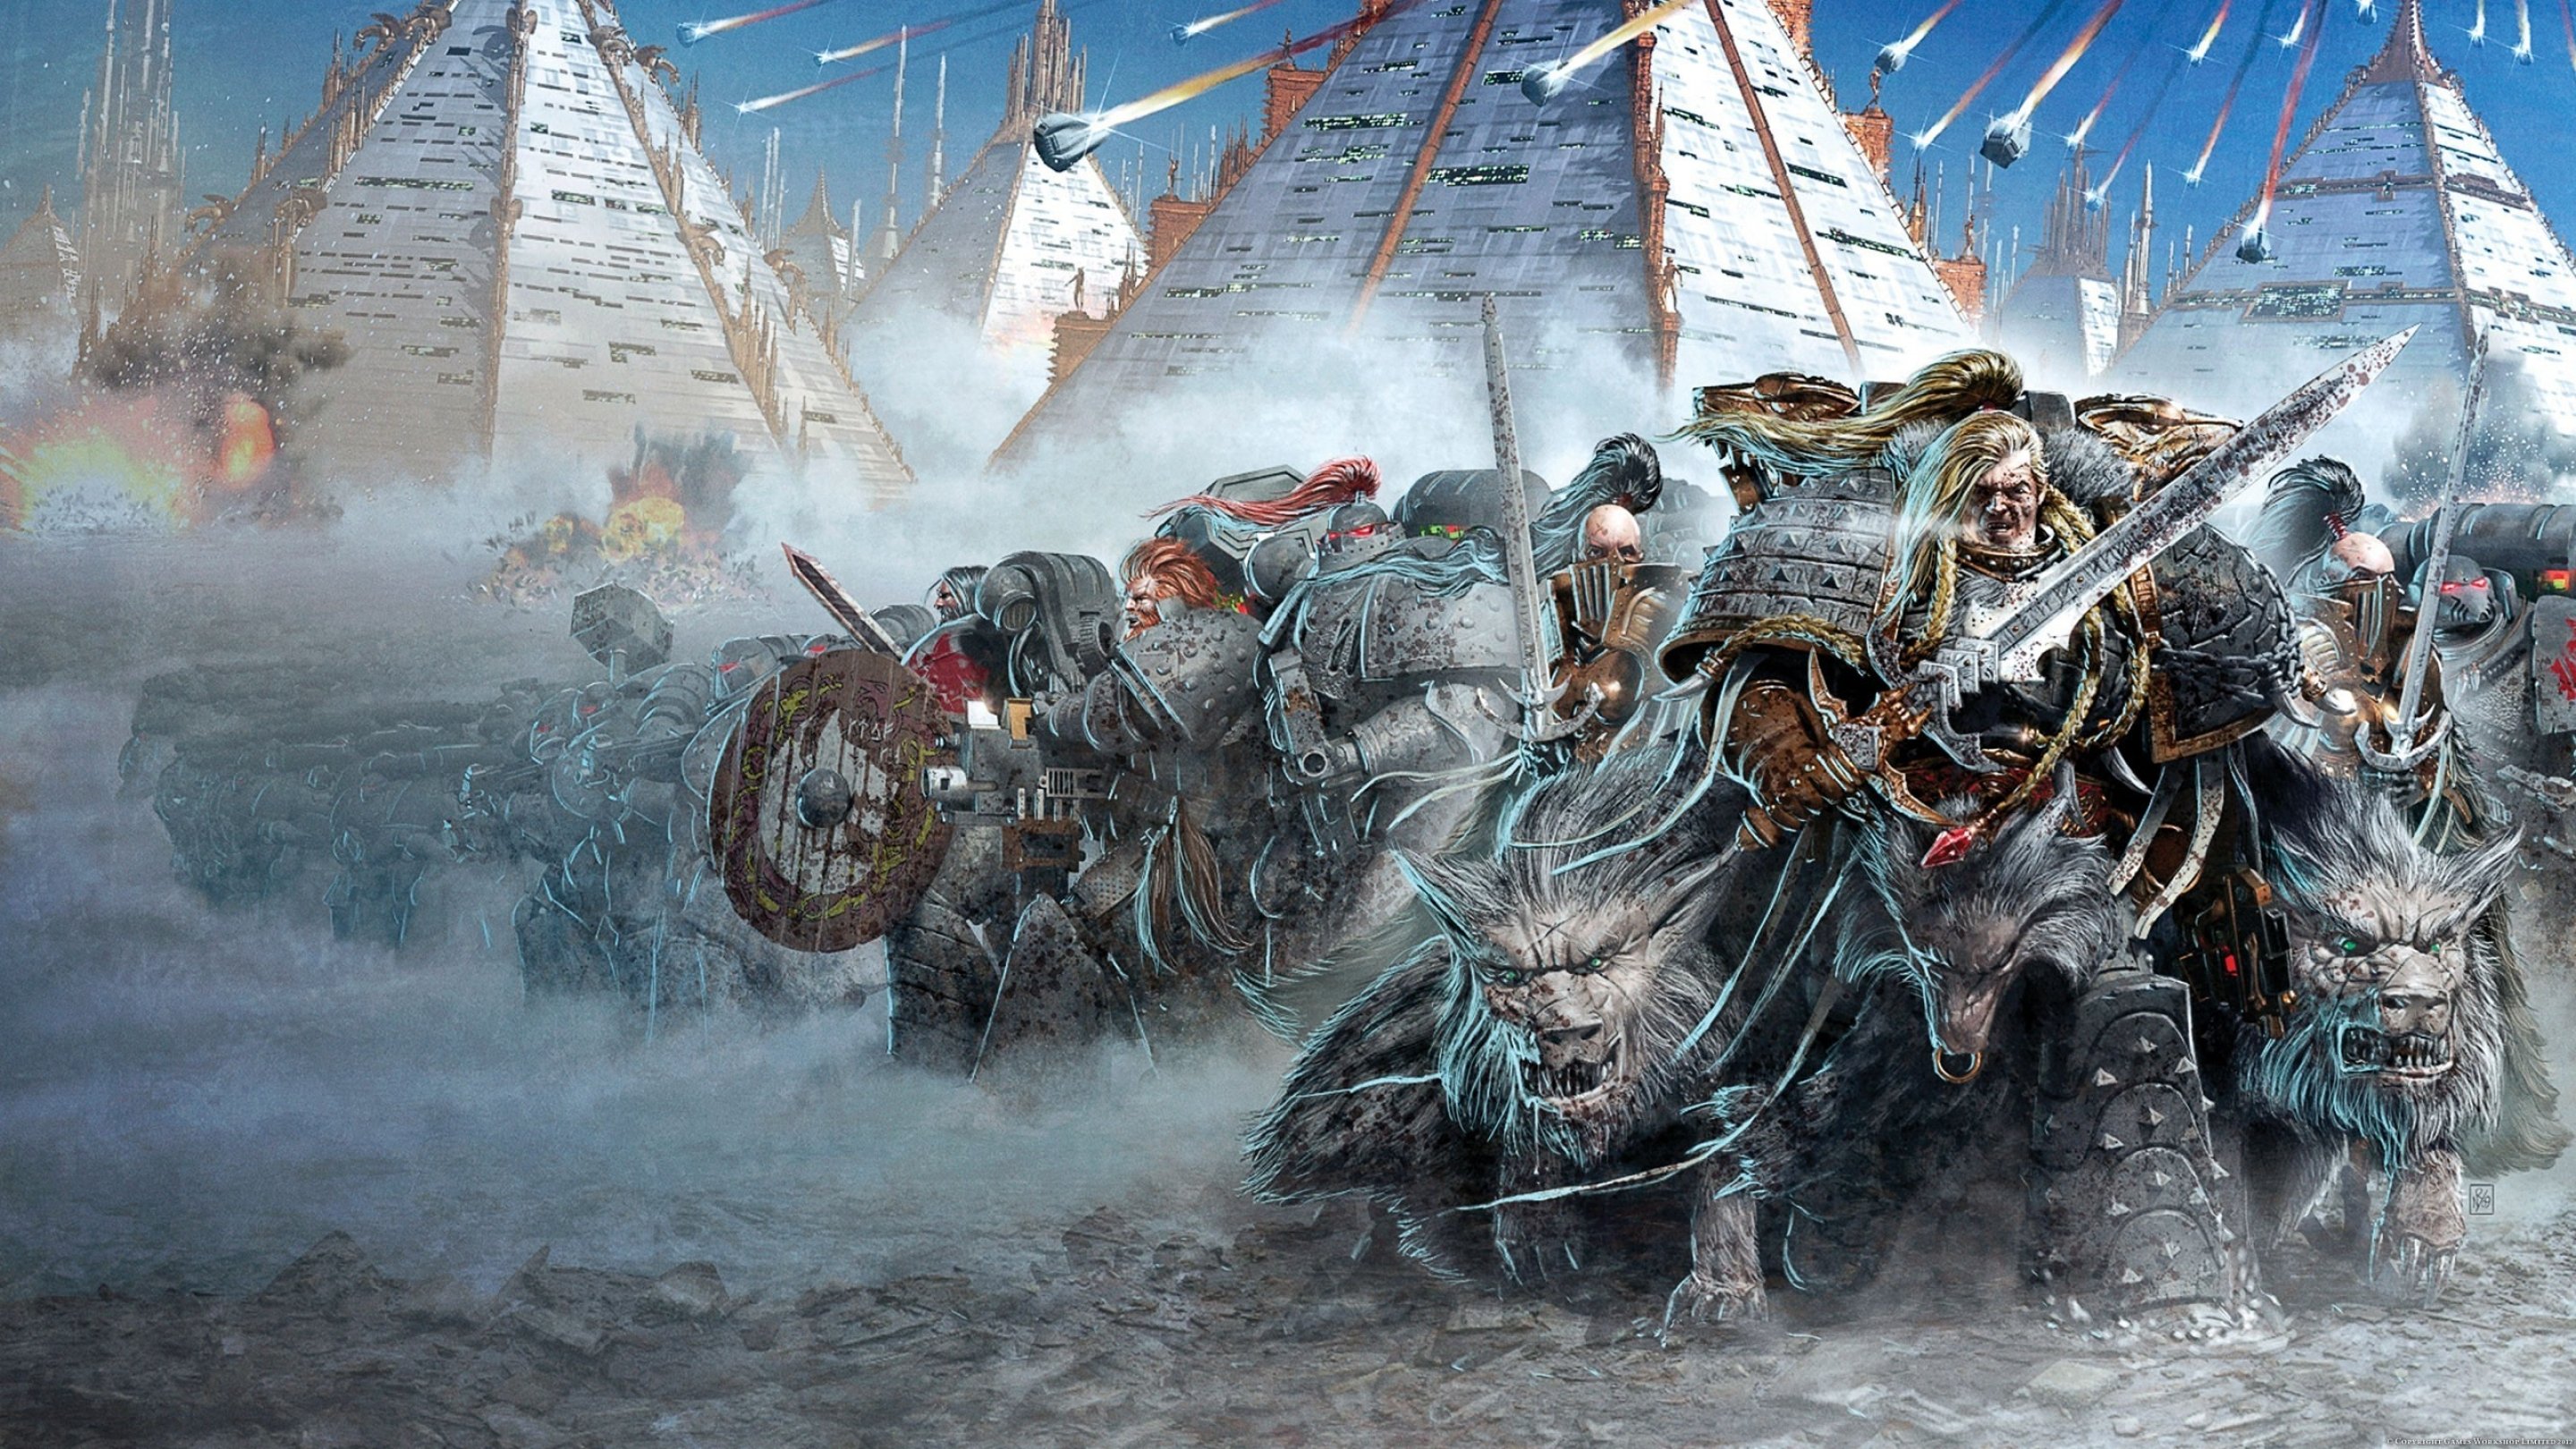 warhammer 40k wallpaper,battle,cg artwork,strategy video game,mythology,viking